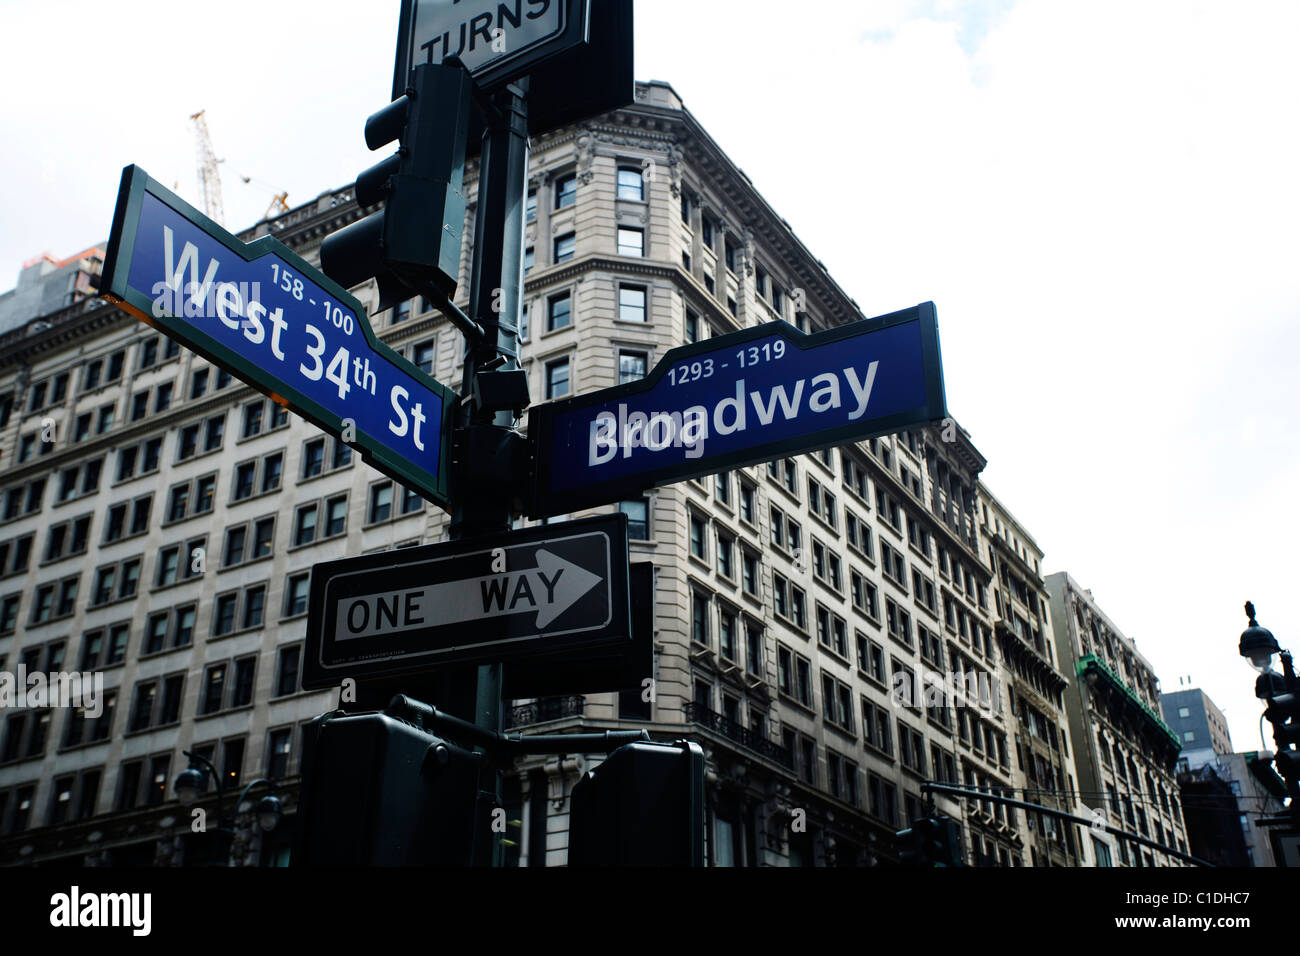 Indicazioni stradali West 34th Street e Broadway junction a Manhattan, New York STATI UNITI D'AMERICA Foto Stock